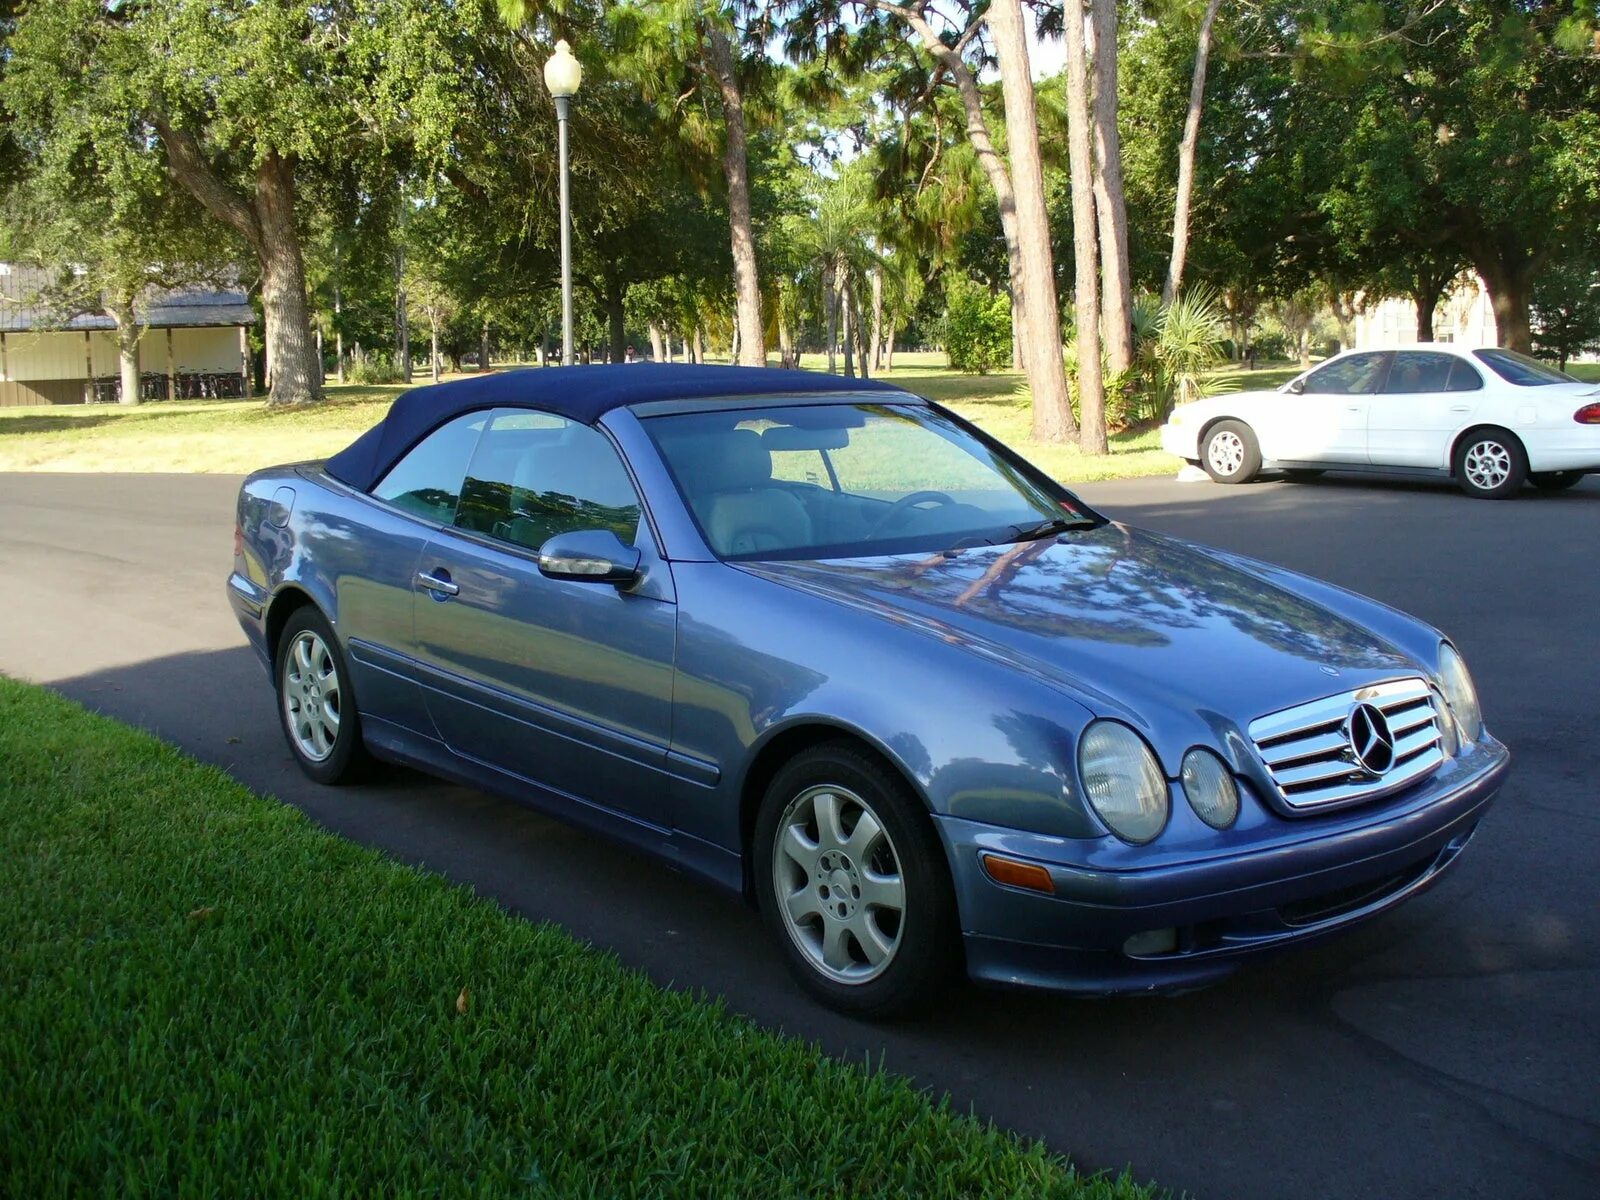 Мерседес 2002 г. Mercedes Benz CLK 2002. Mercedes Benz CLK-class 320. Мерседес ЦЛК 2002. Mercedes CLK 211.